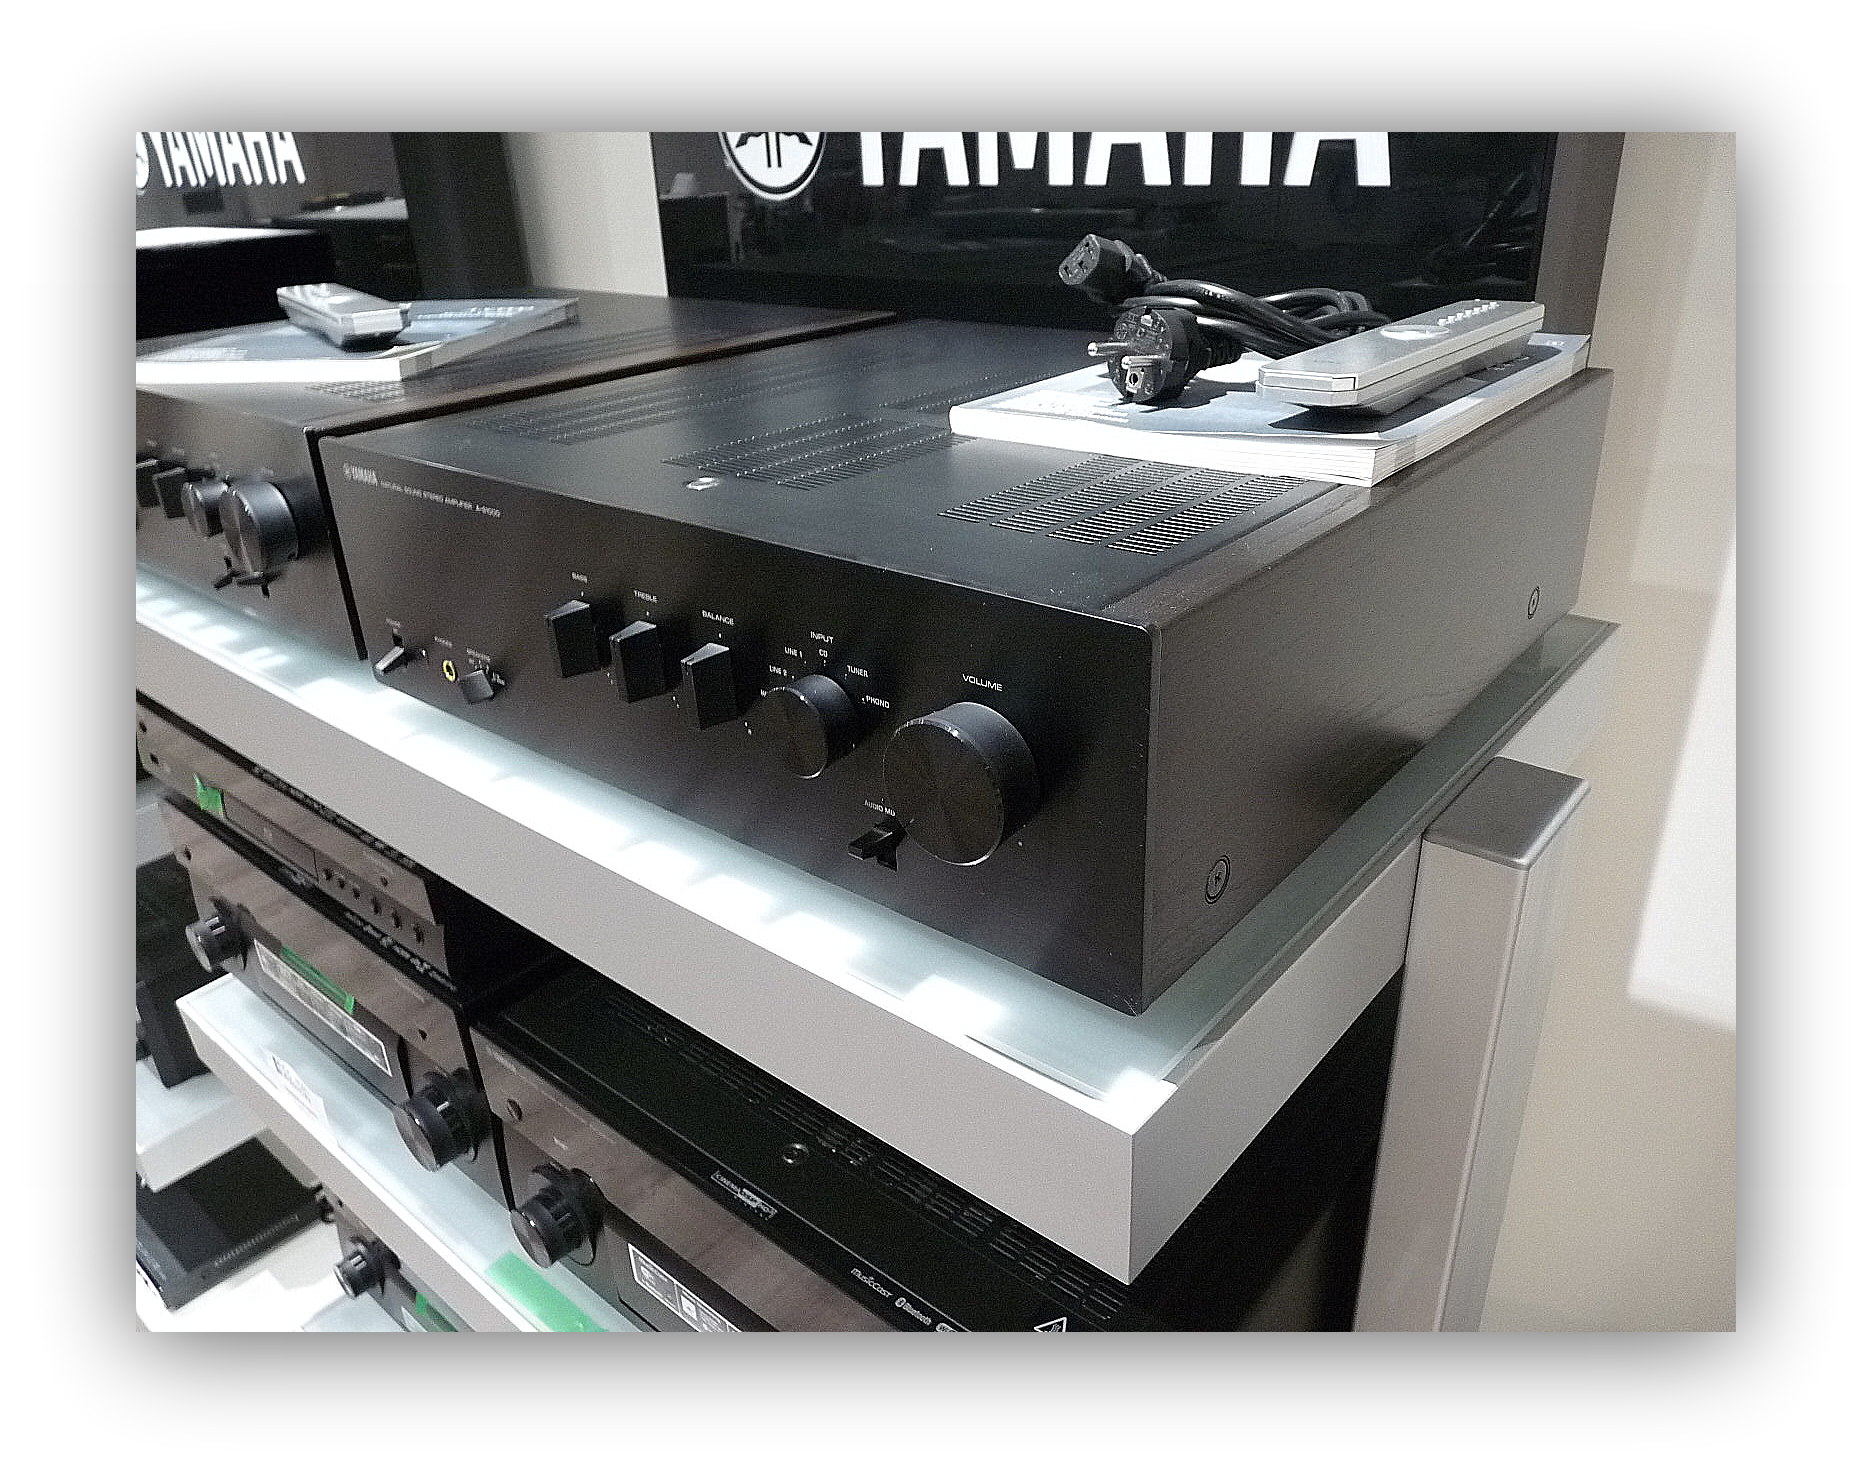 A-S1000 - Yamaha A-S1000 - Audiofanzine